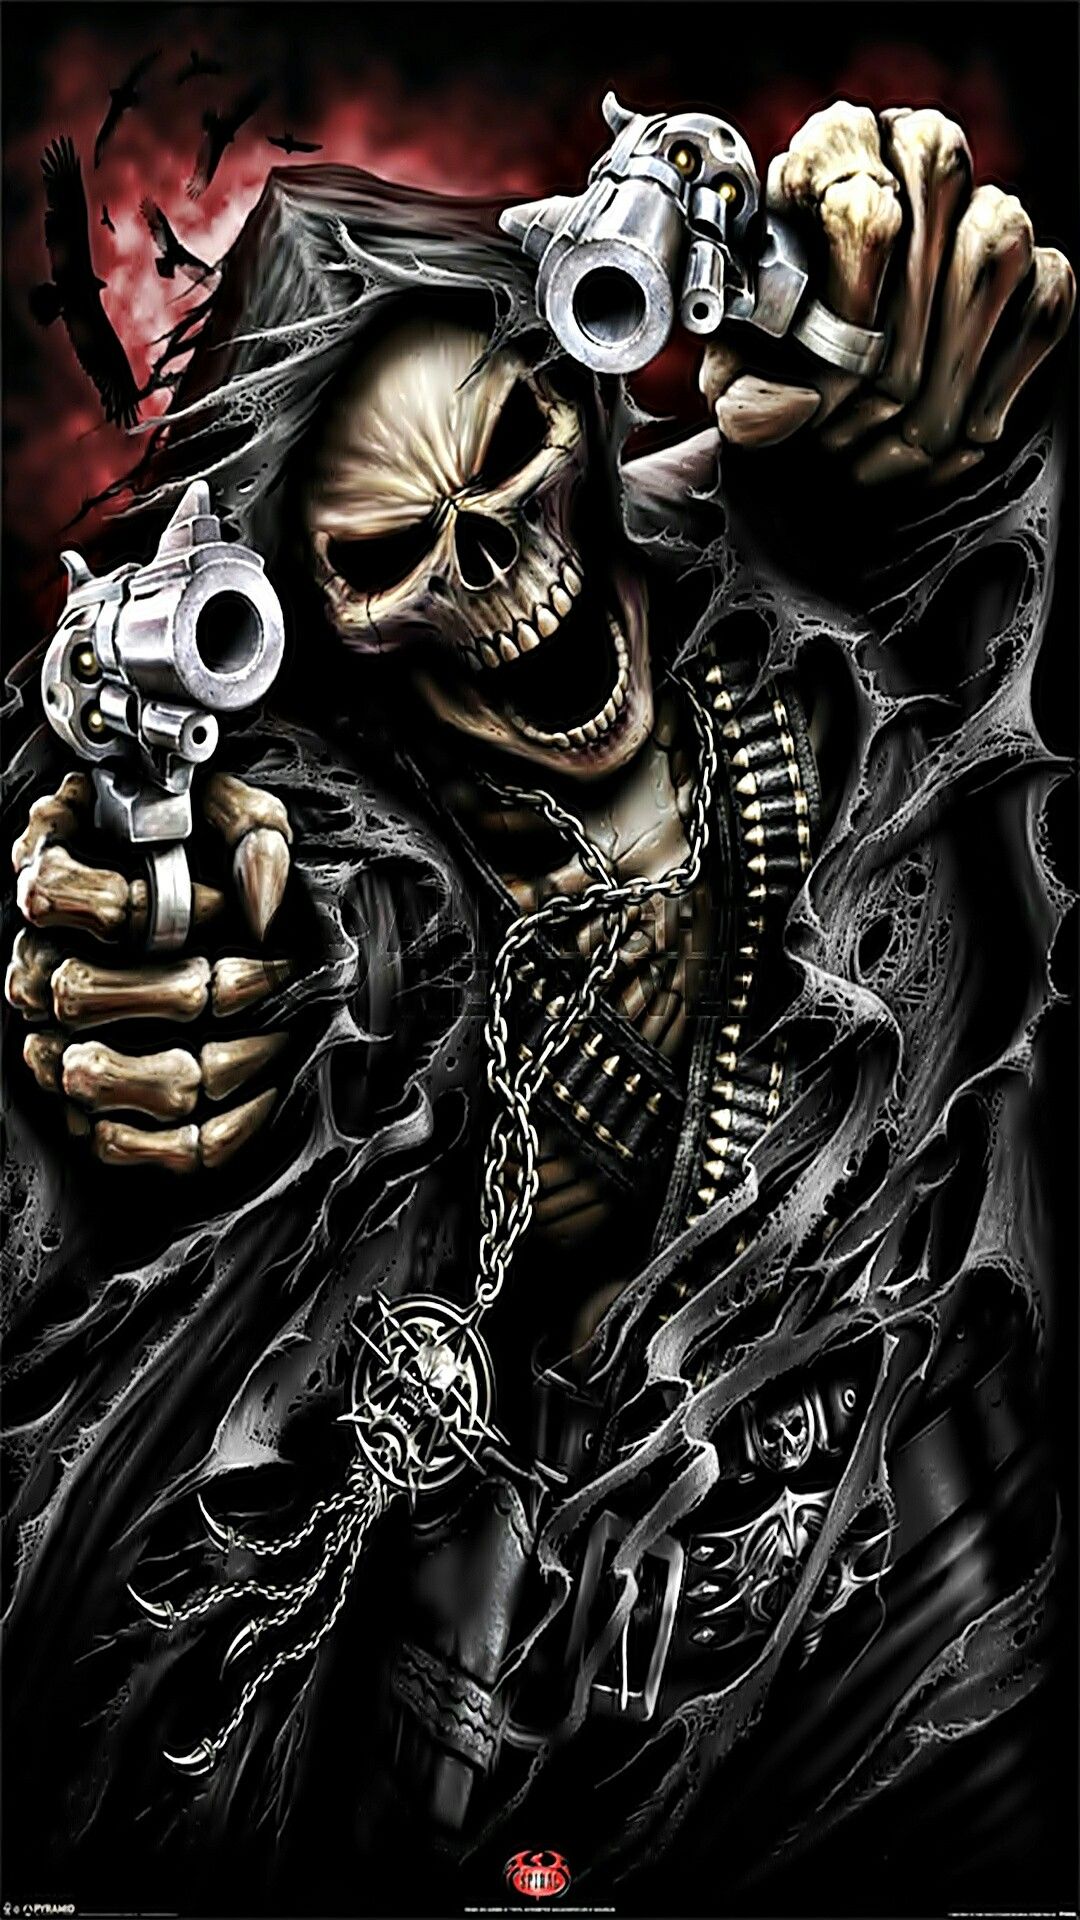 Gangster Skeleton Wallpaper & Background Beautiful Best Available For Download Gangster Skeleton Photo Free On Zicxa.com Image